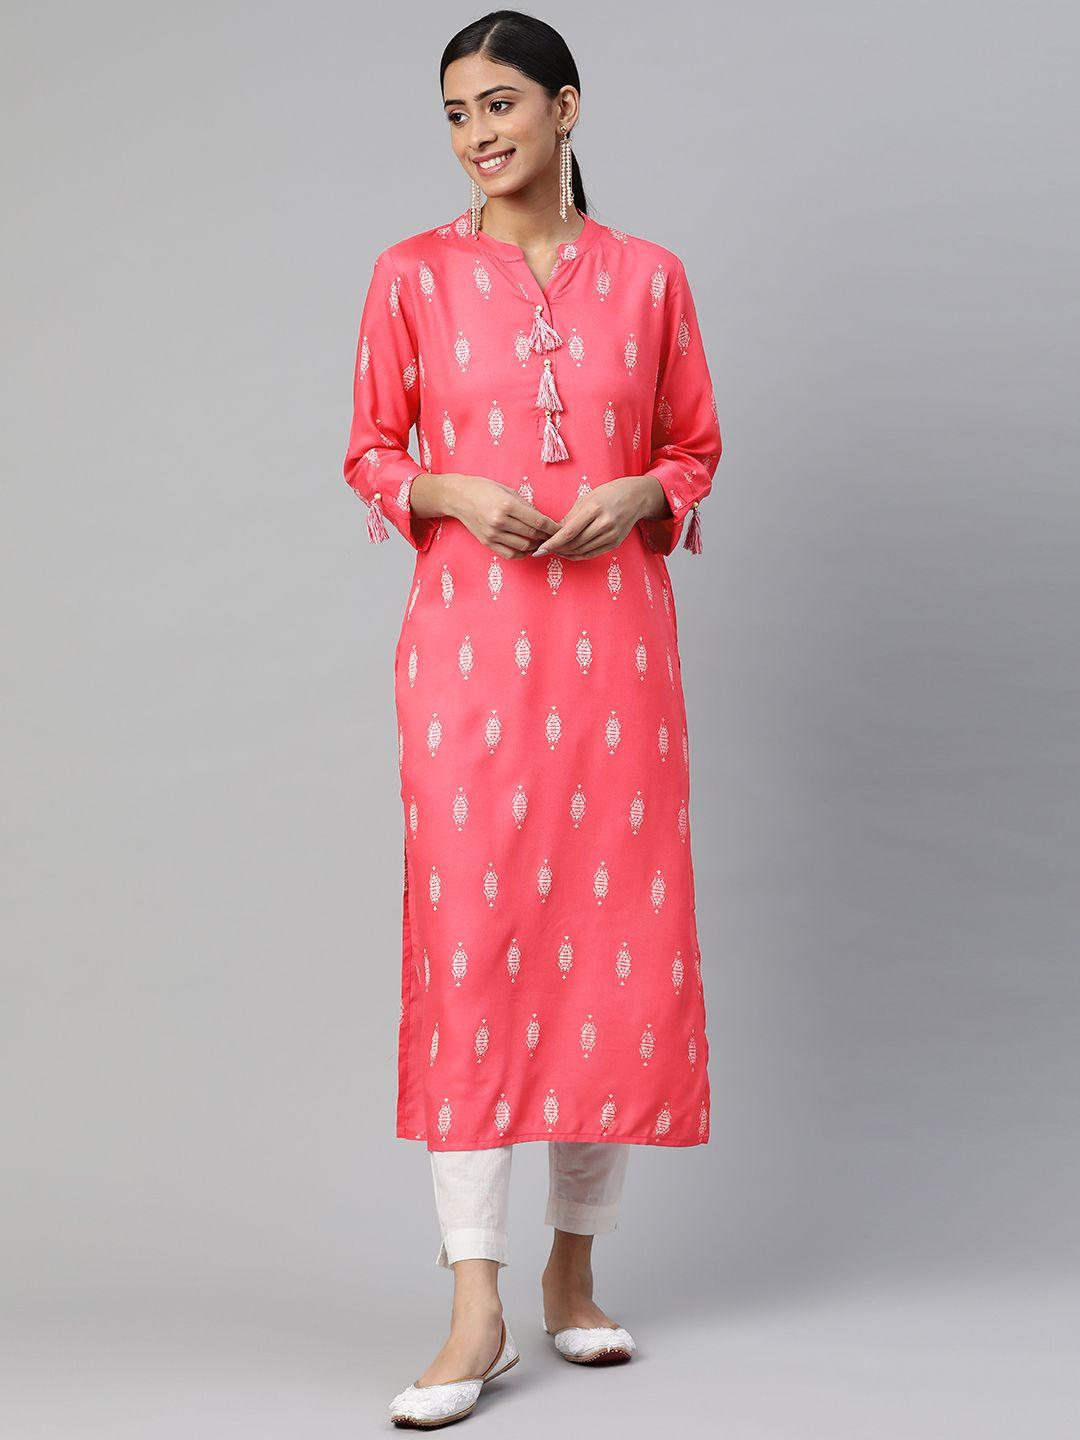 svarchi women pink & white geometric printed kurta